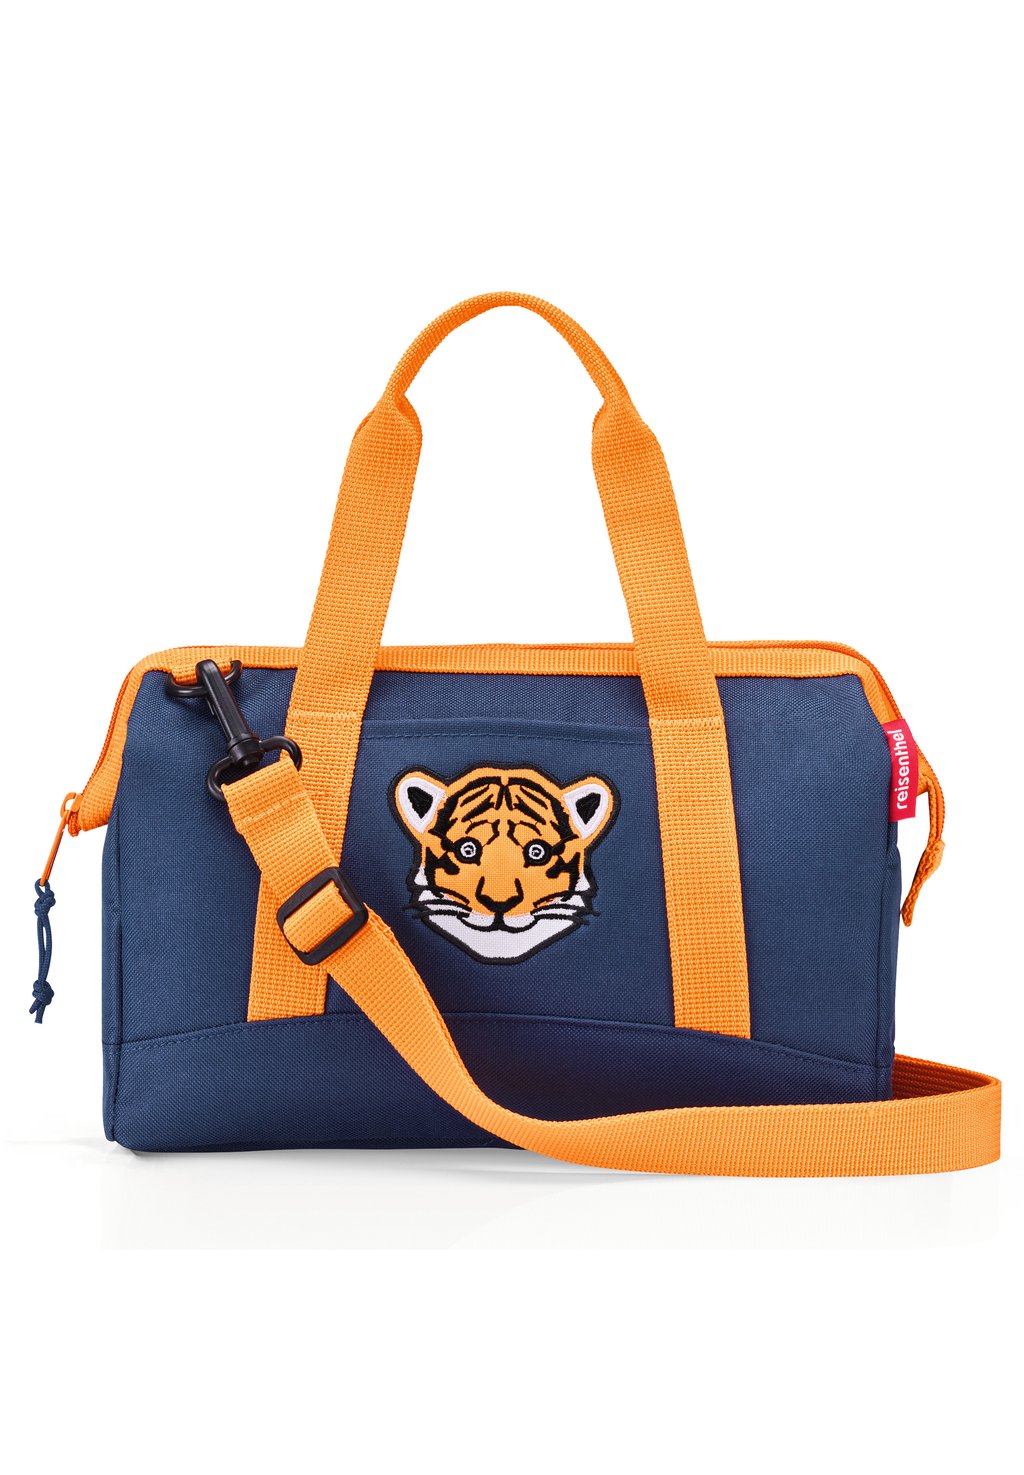 Спортивная сумка ALLROUNDER XS Reisenthel, цвет tiger navy сумки для мамы reisenthel сумка allrounder m zebra